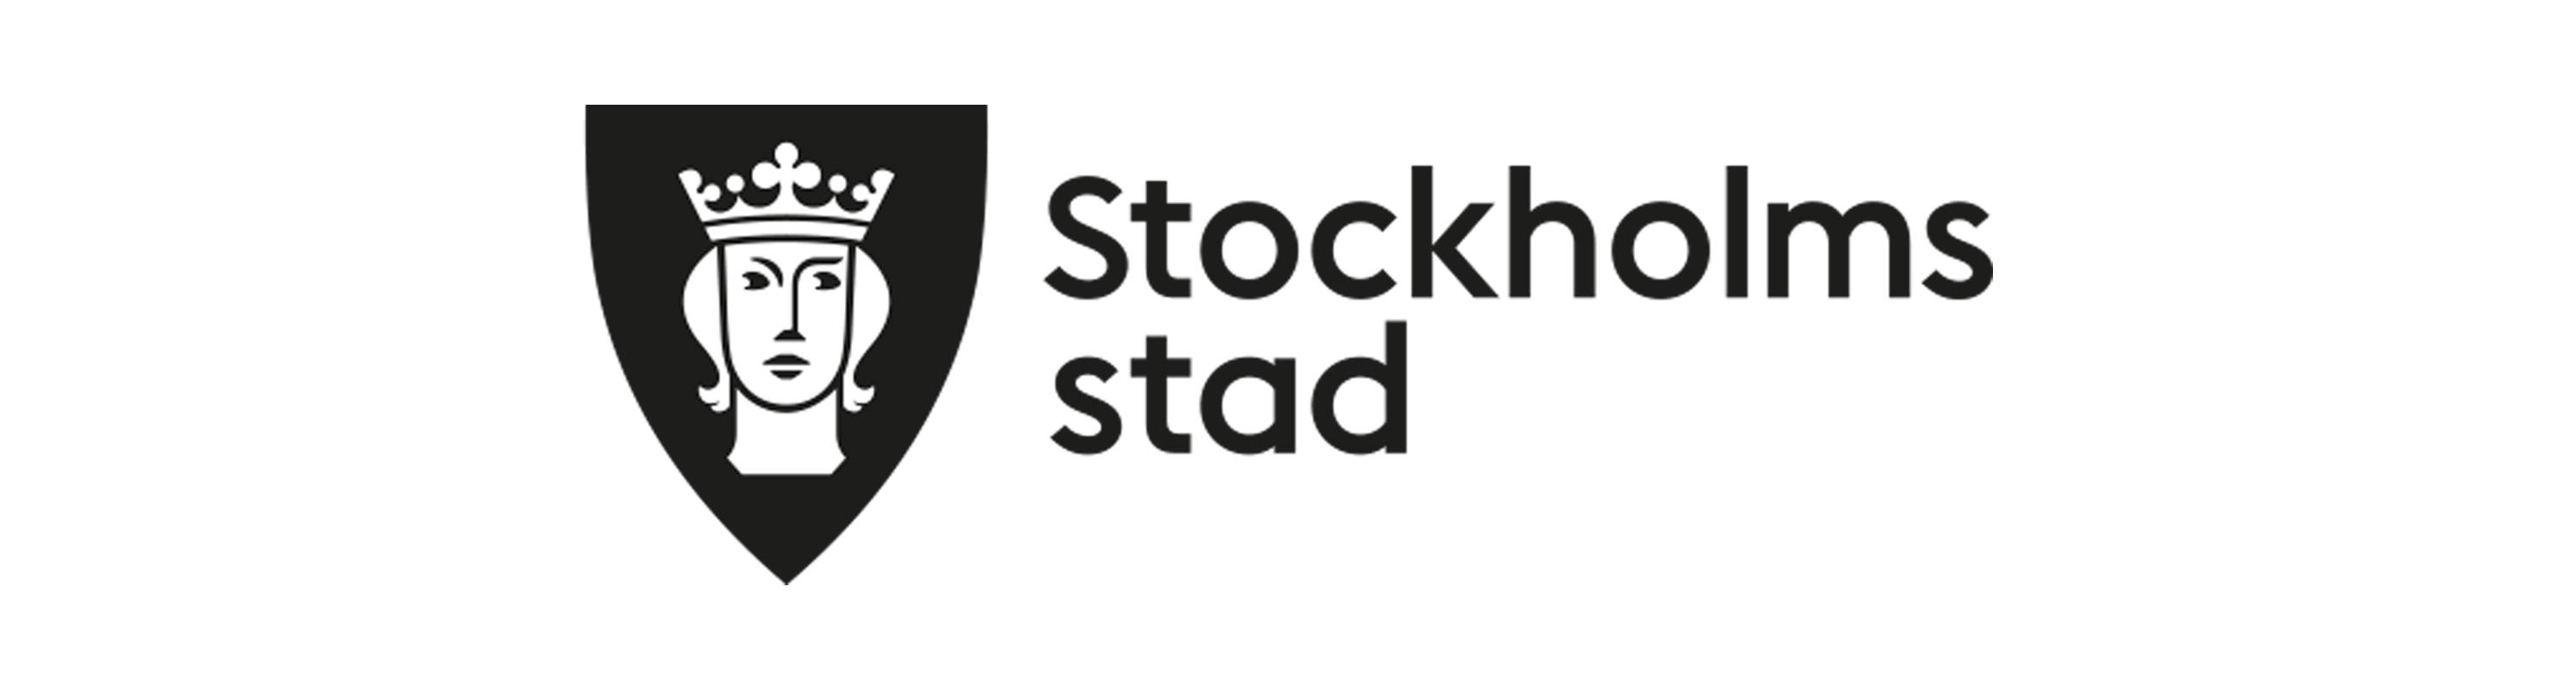 stockholms stad